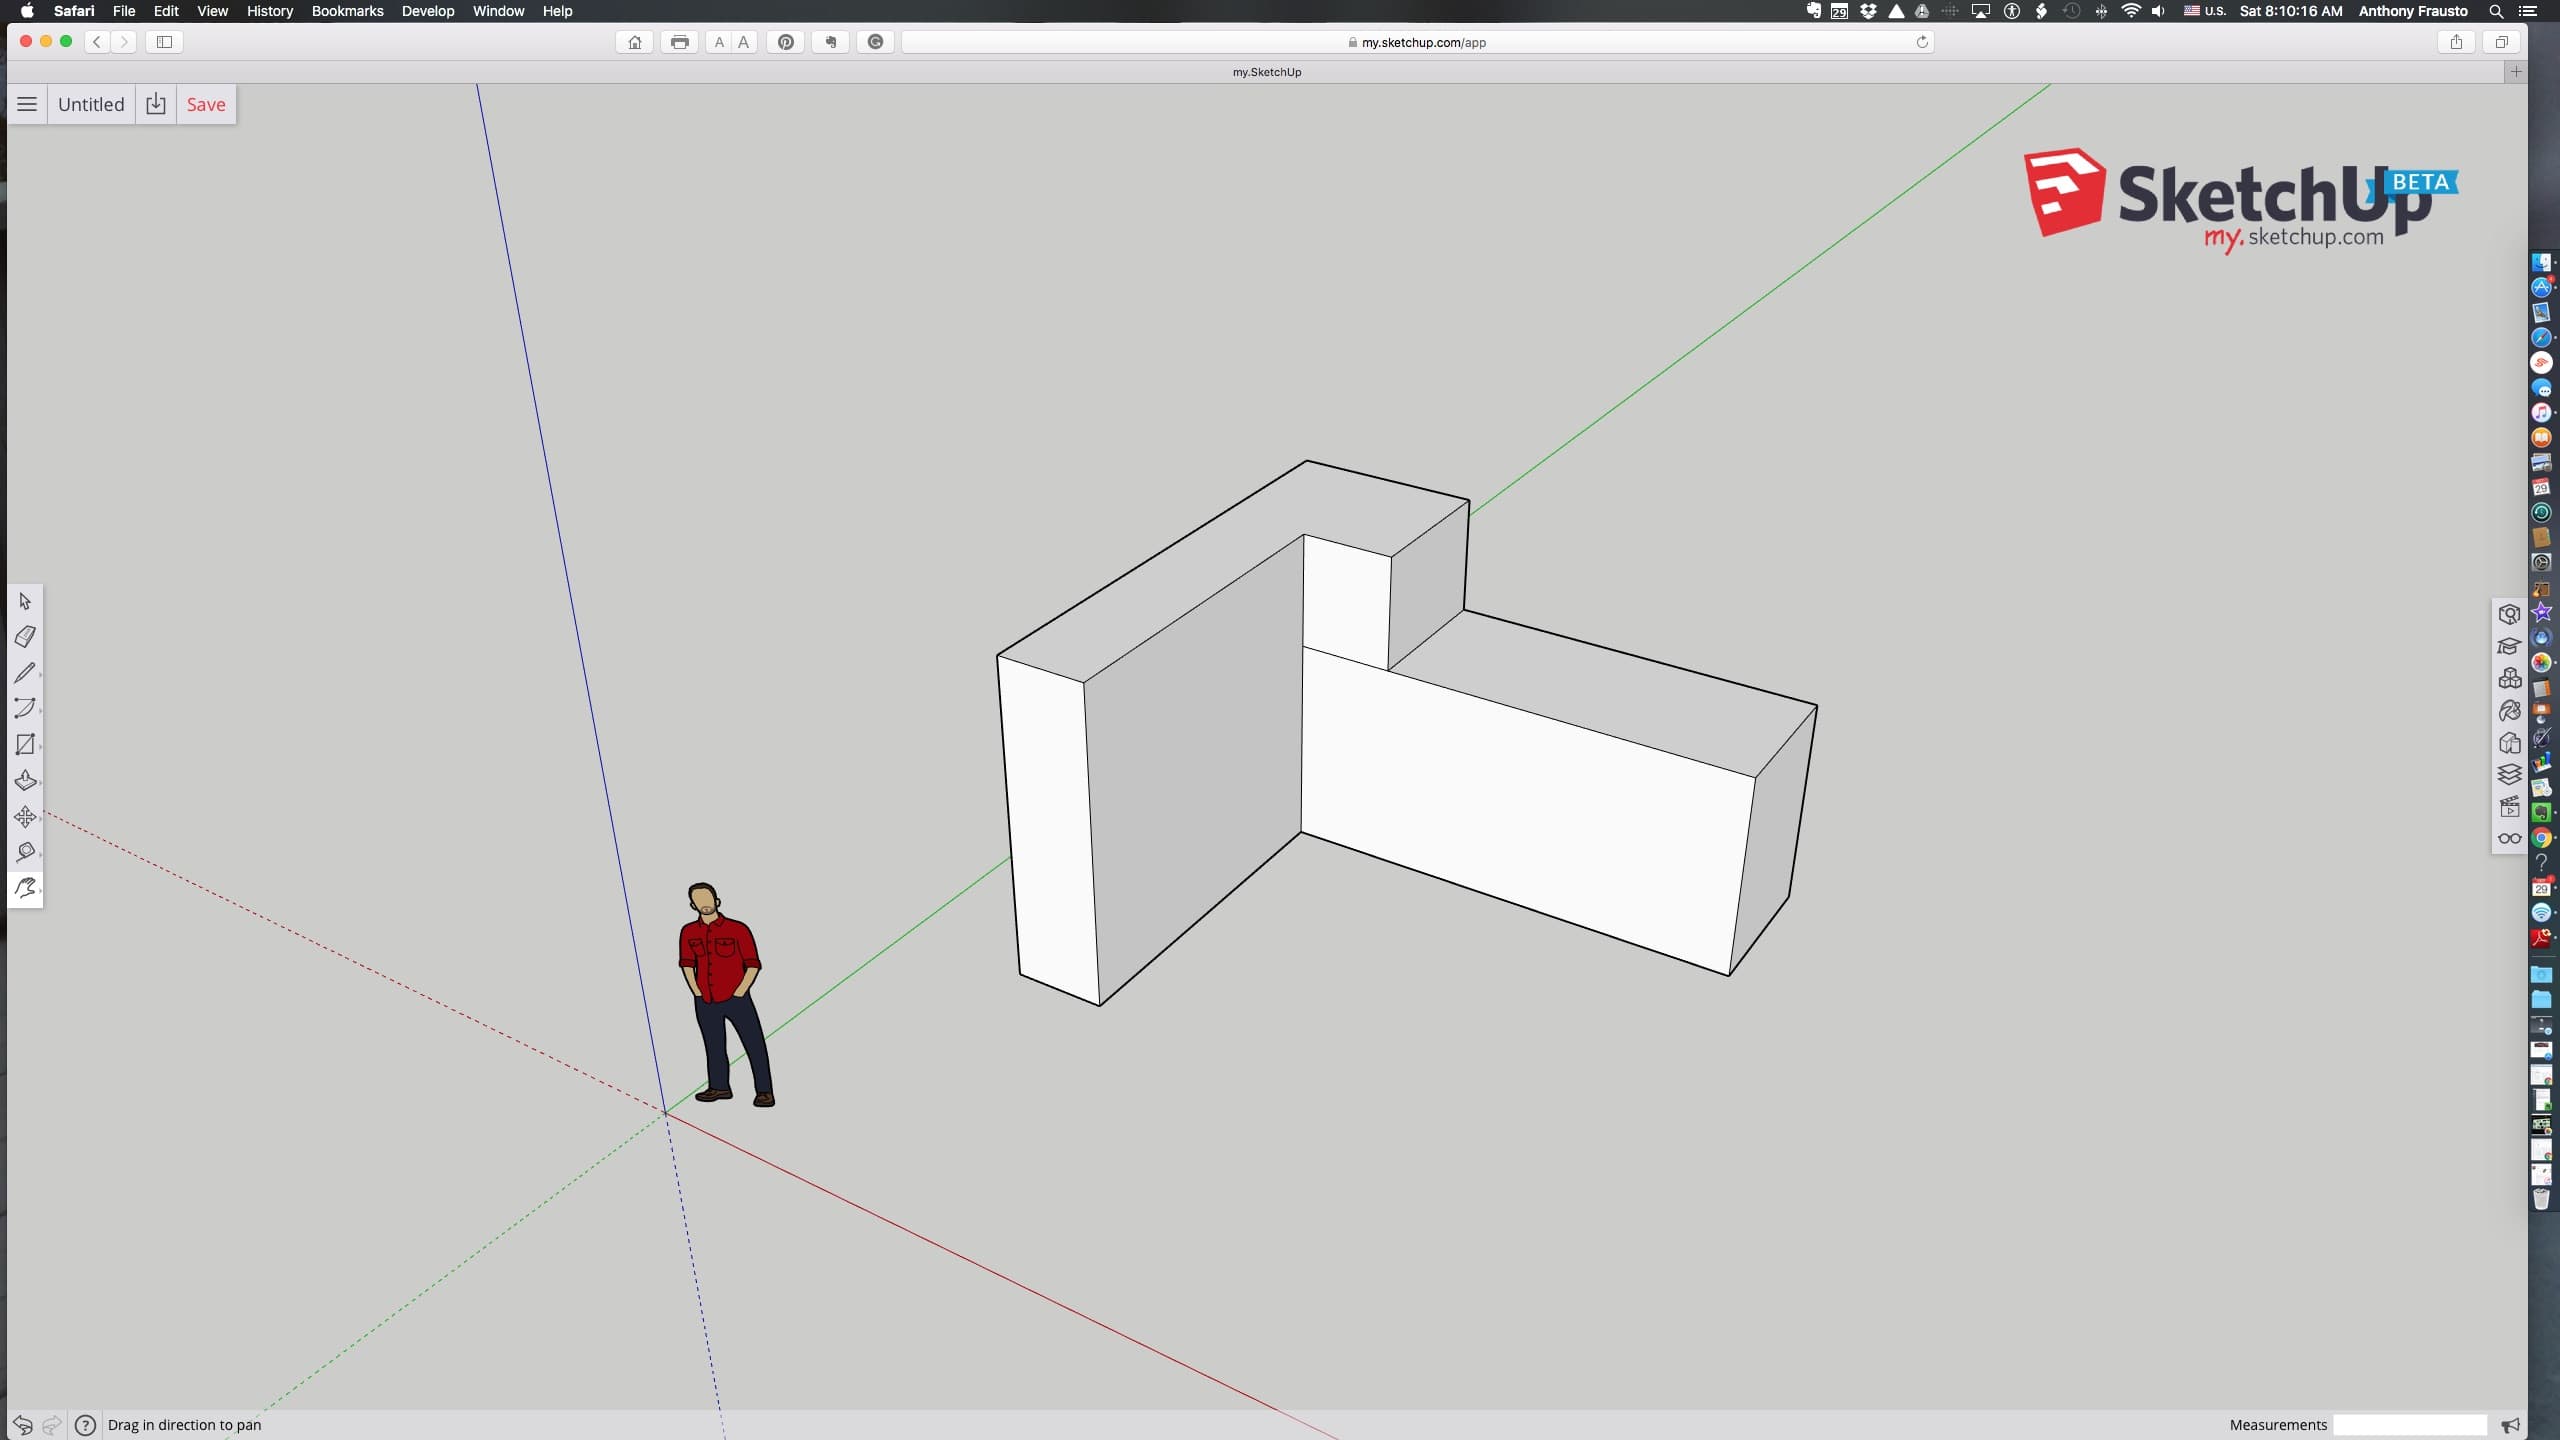 Sketchup - darmowe oprogramowanie do modelowania 3D